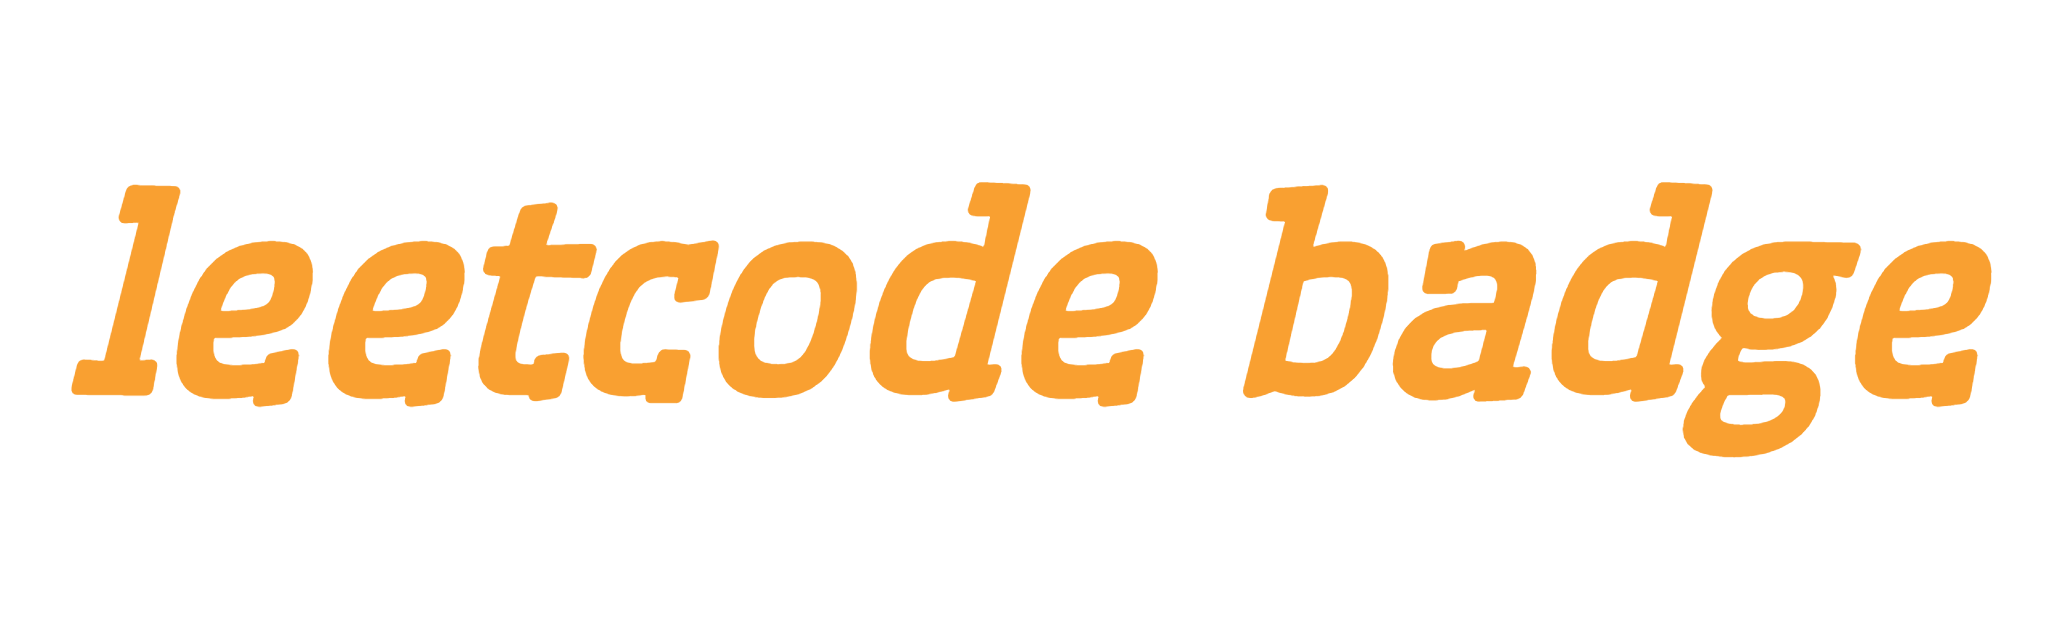 leetcode-badge